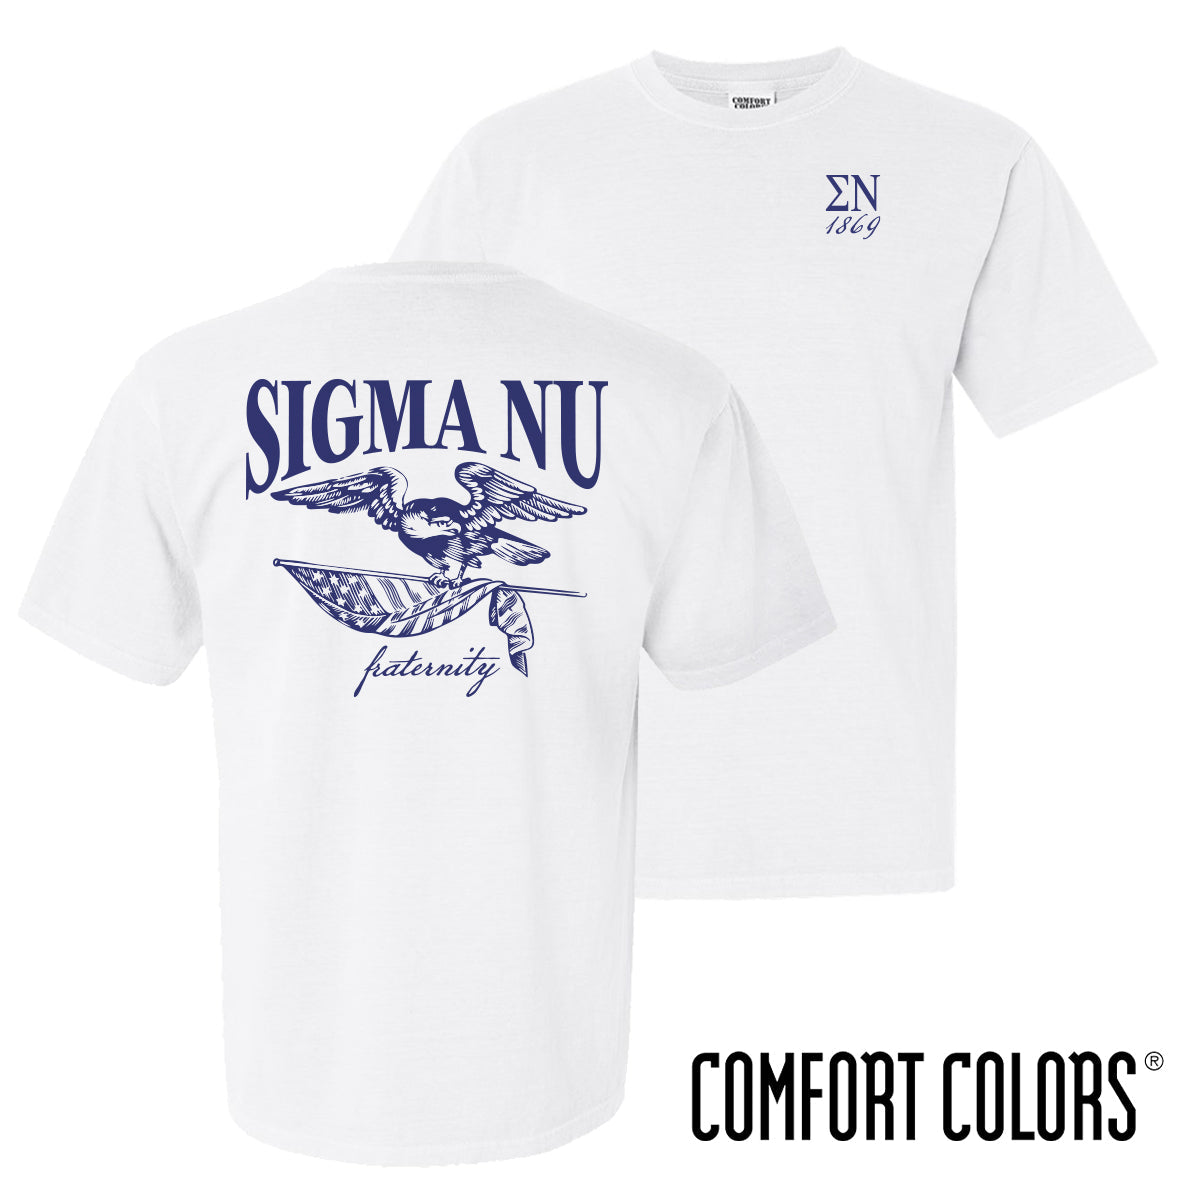 Sigma Nu Comfort Colors Freedom White Short Sleeve Tee